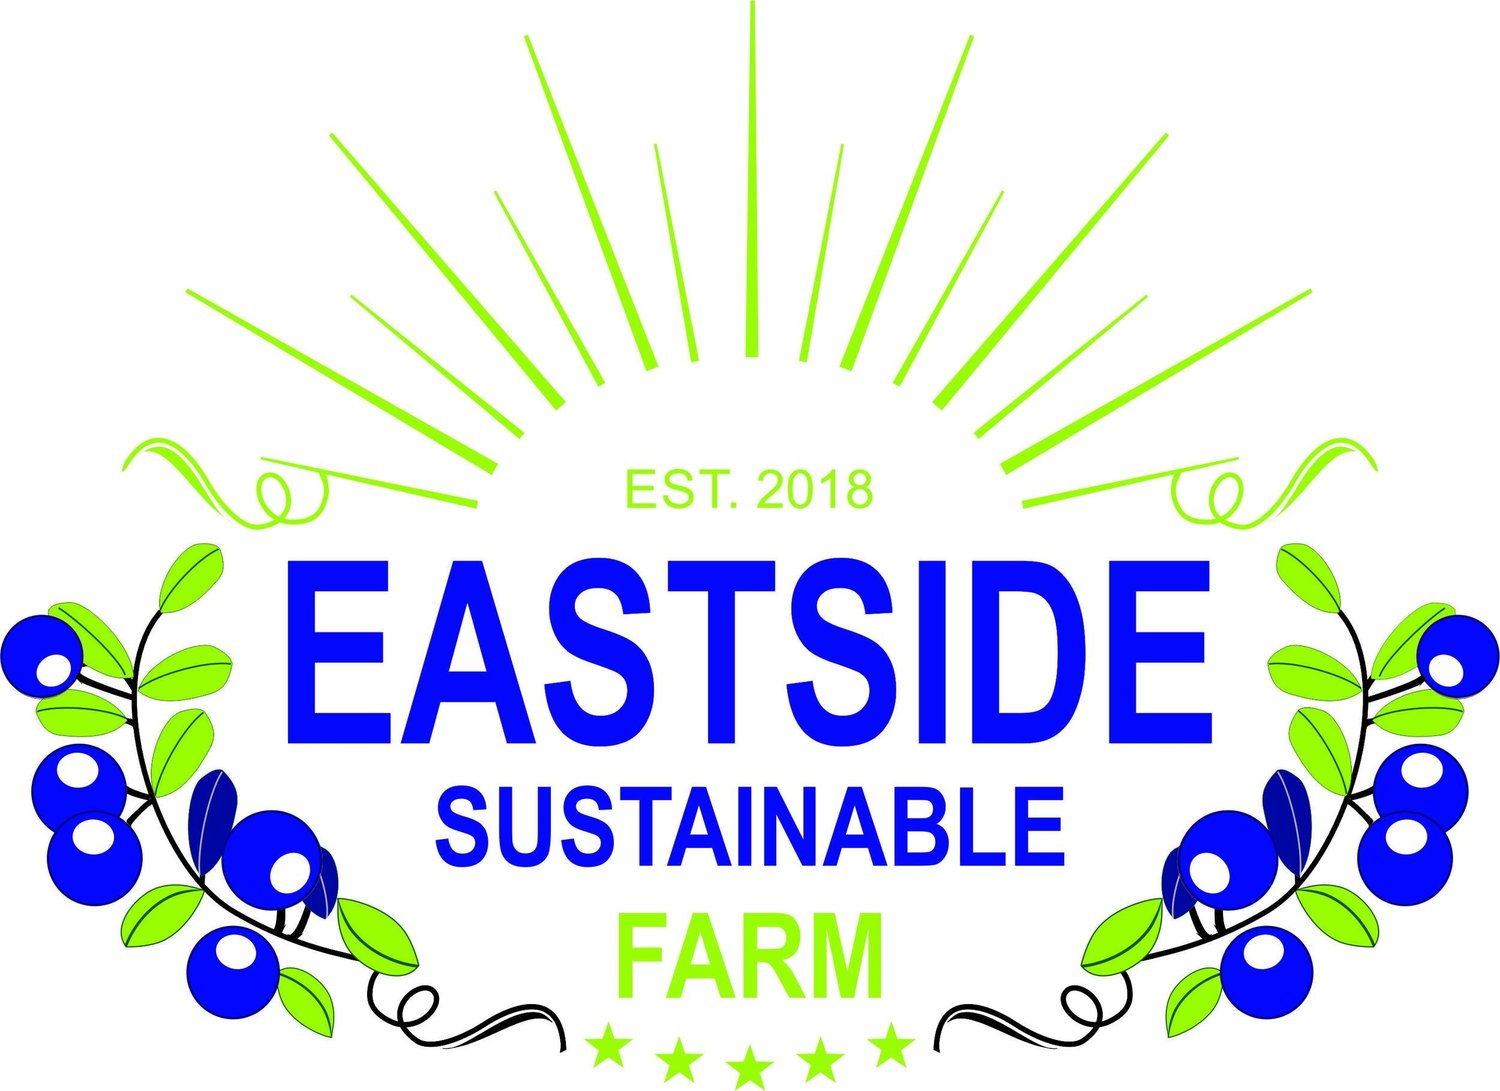 The Gardens Eastside Sustainable Farm